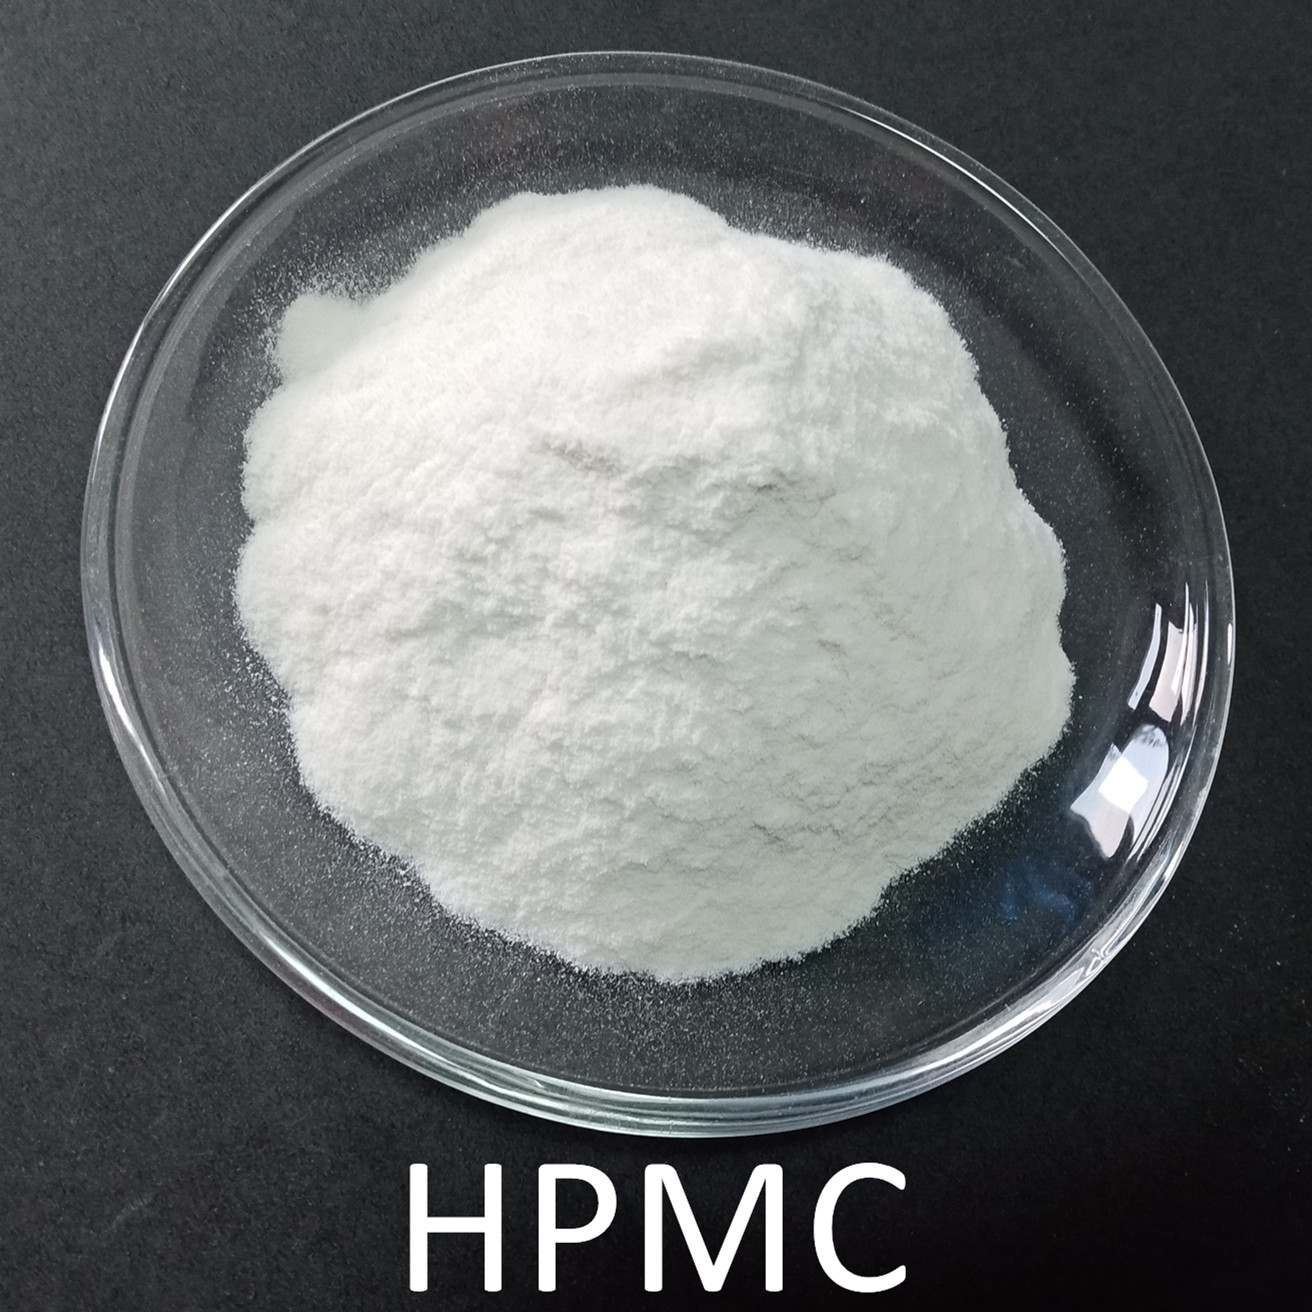 Pharmaceutical grade HPMC Hydroxypropyl Methylcellulose